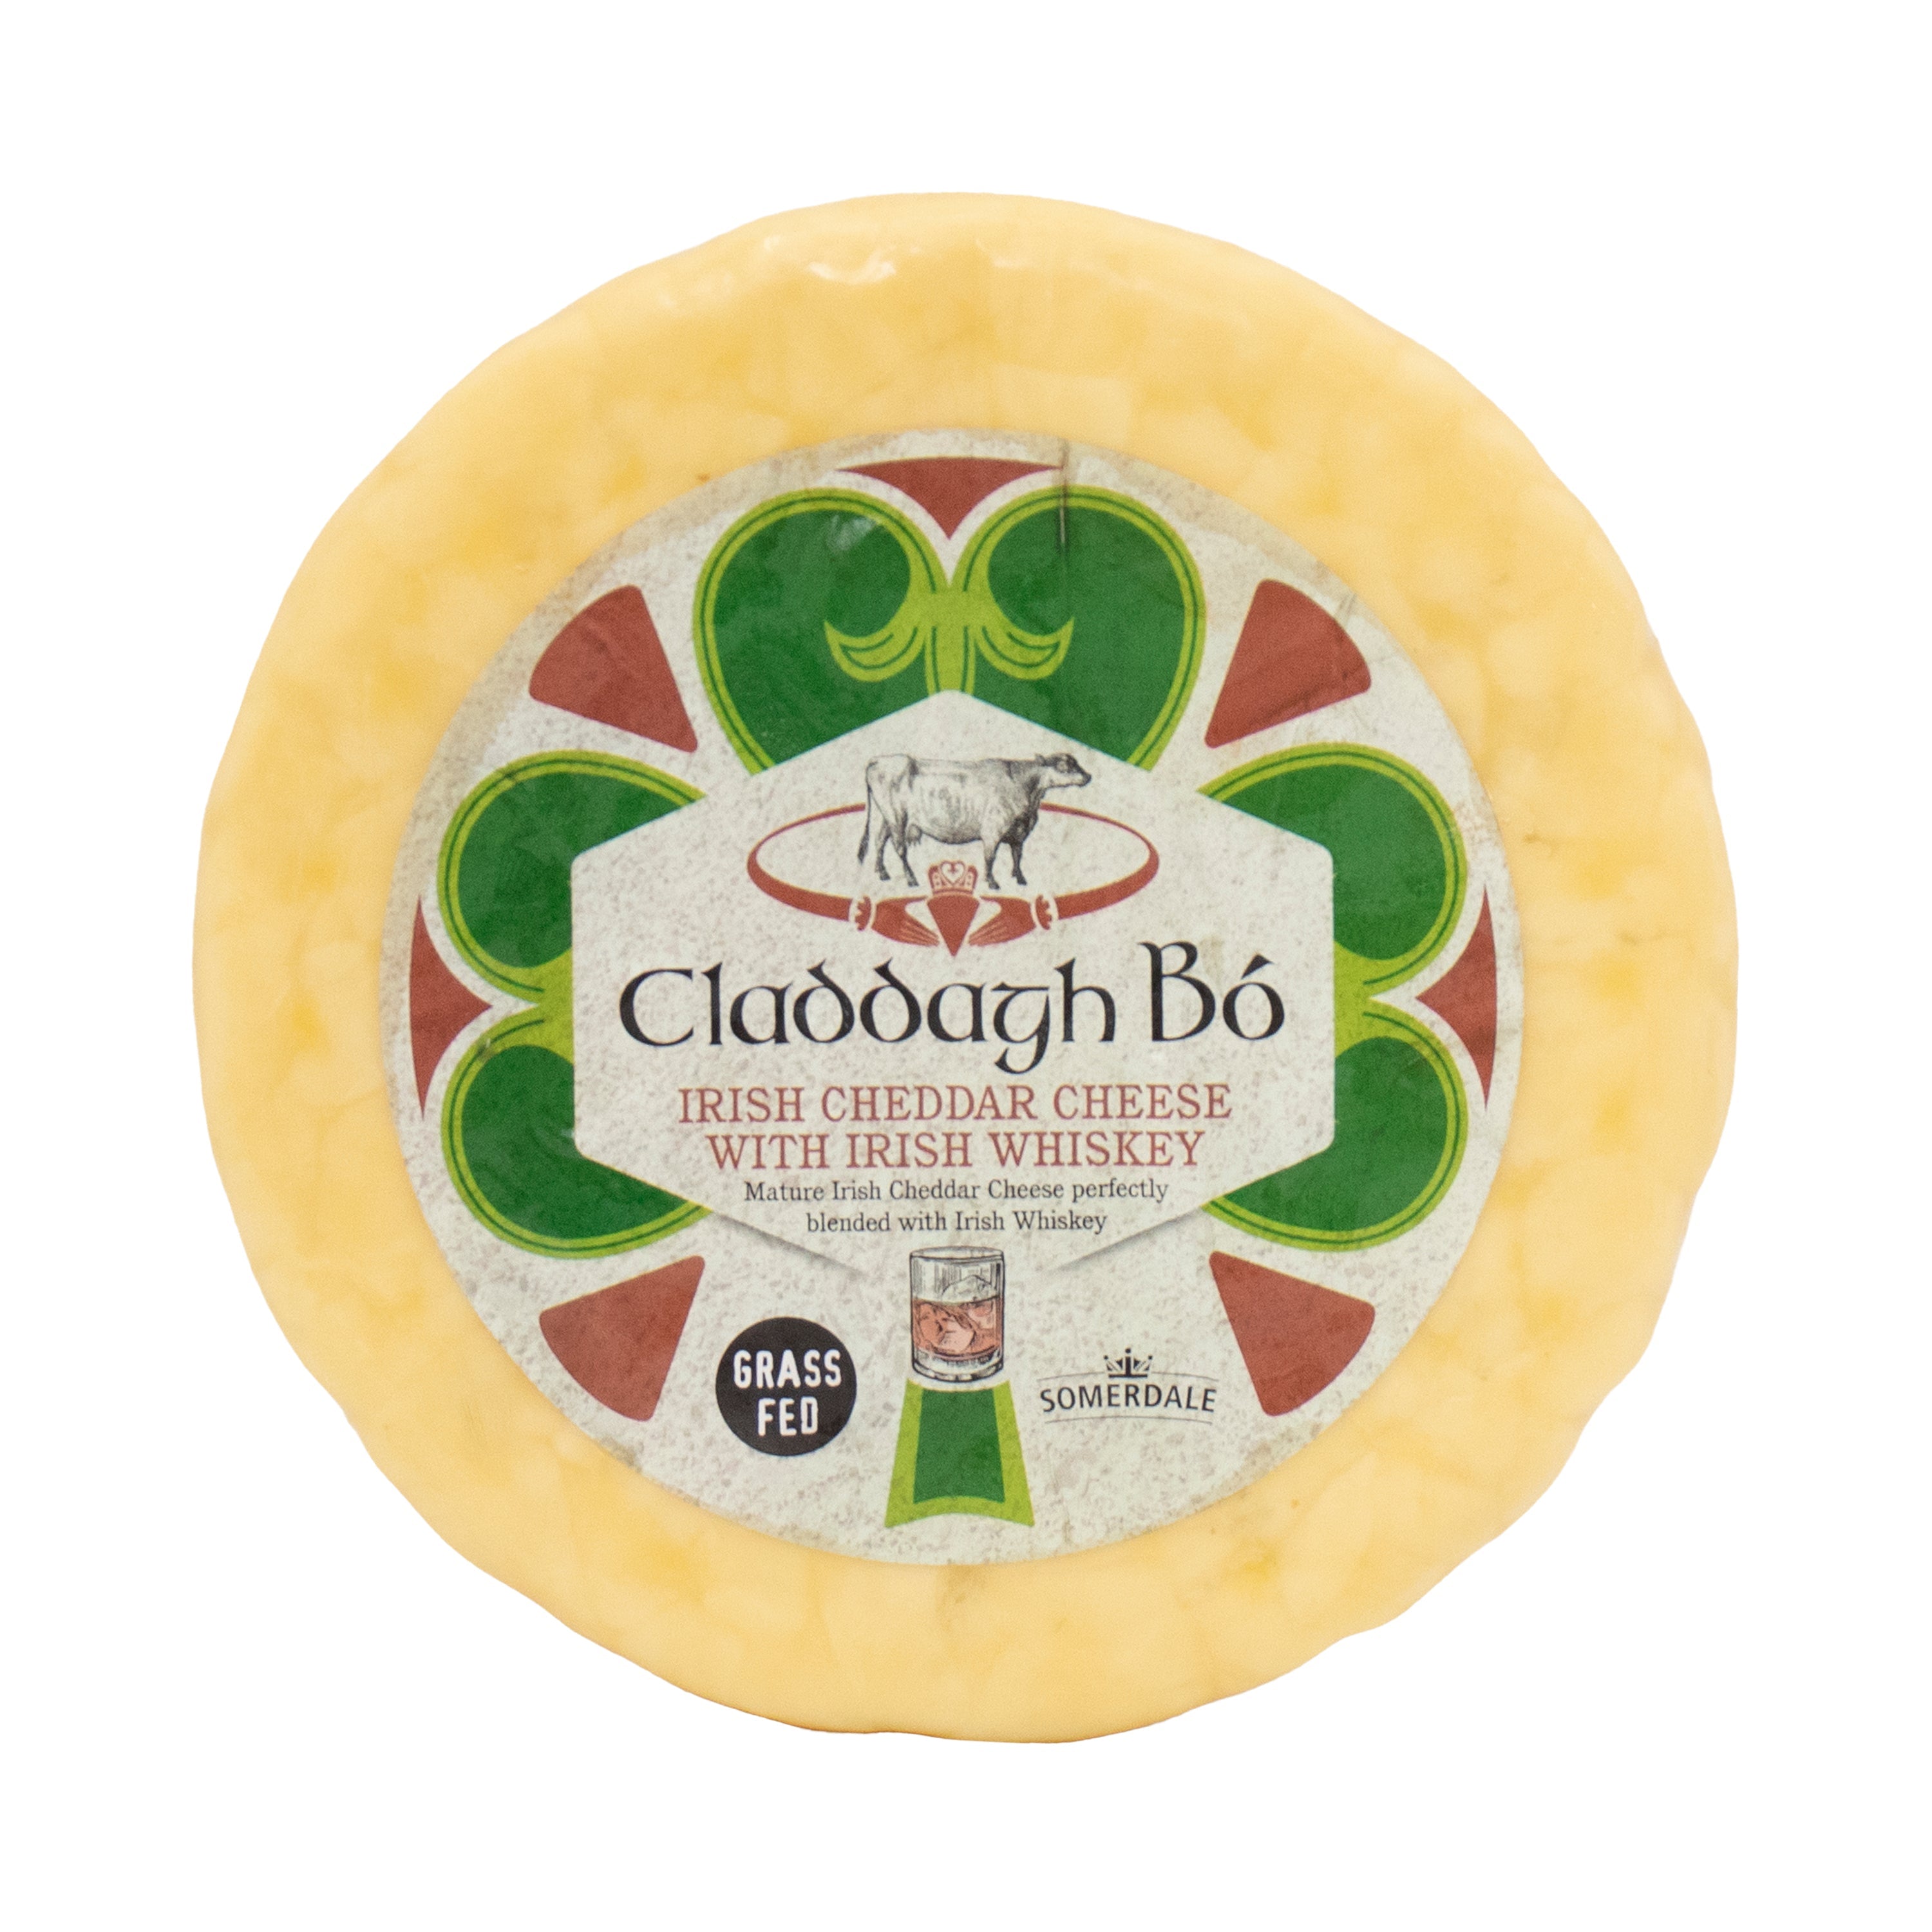 Claddagh Bo Irish Cheddar Cheese with Irish Whiskey 5.3lb